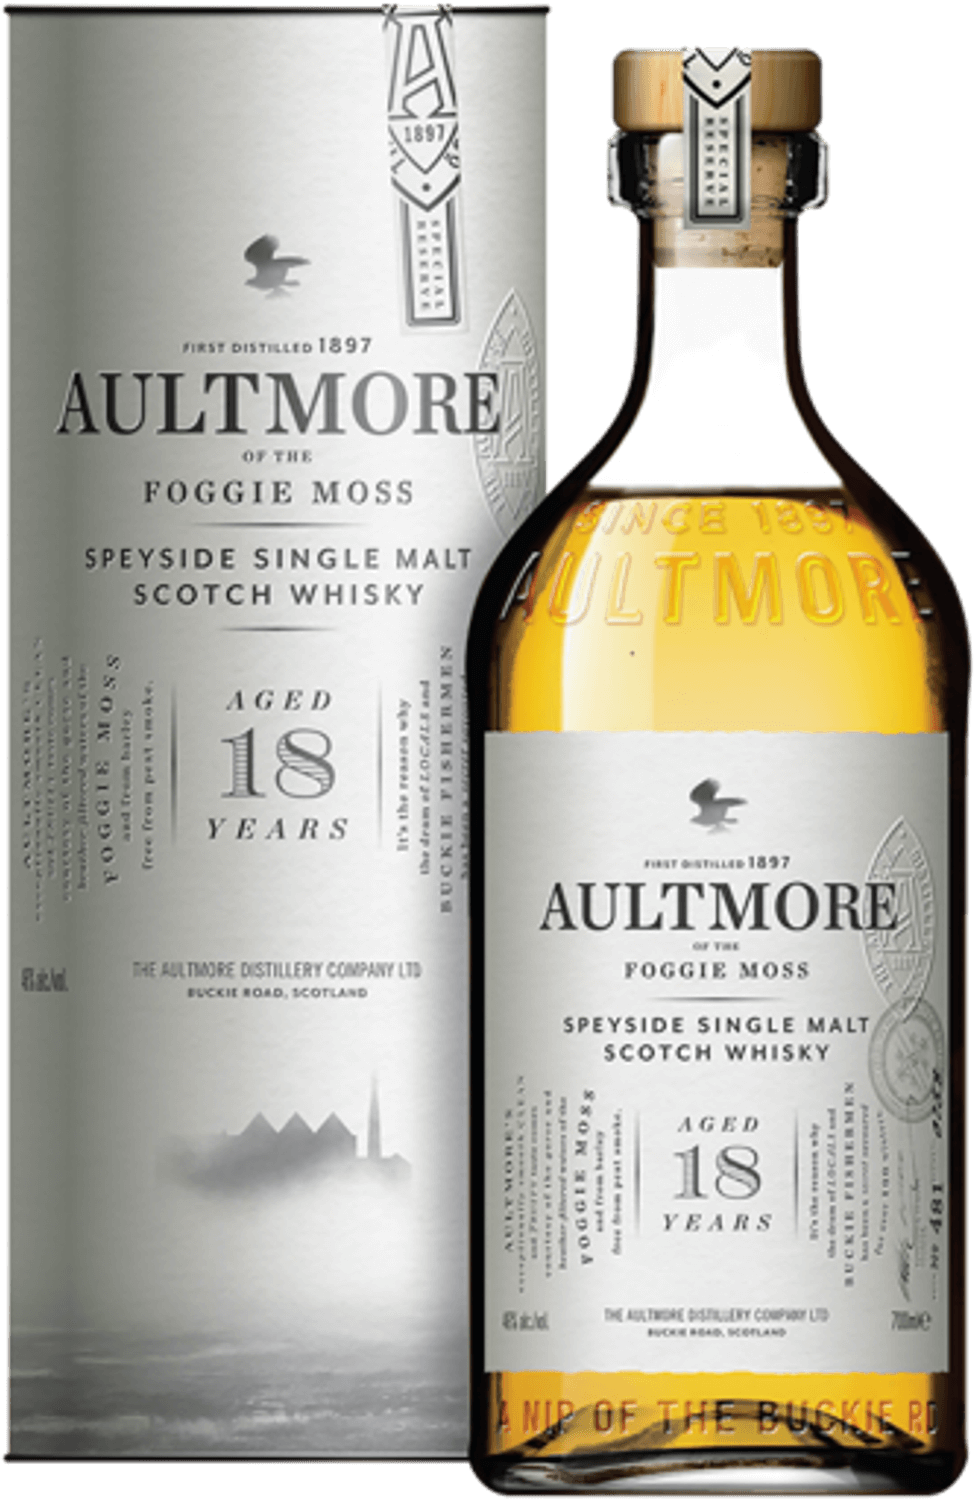 Aultmore 18 Years Old Speyside Single Malt Scotch Whisky (gift box) old ballantruan speyside glenlivet single malt scotch whisky gift box